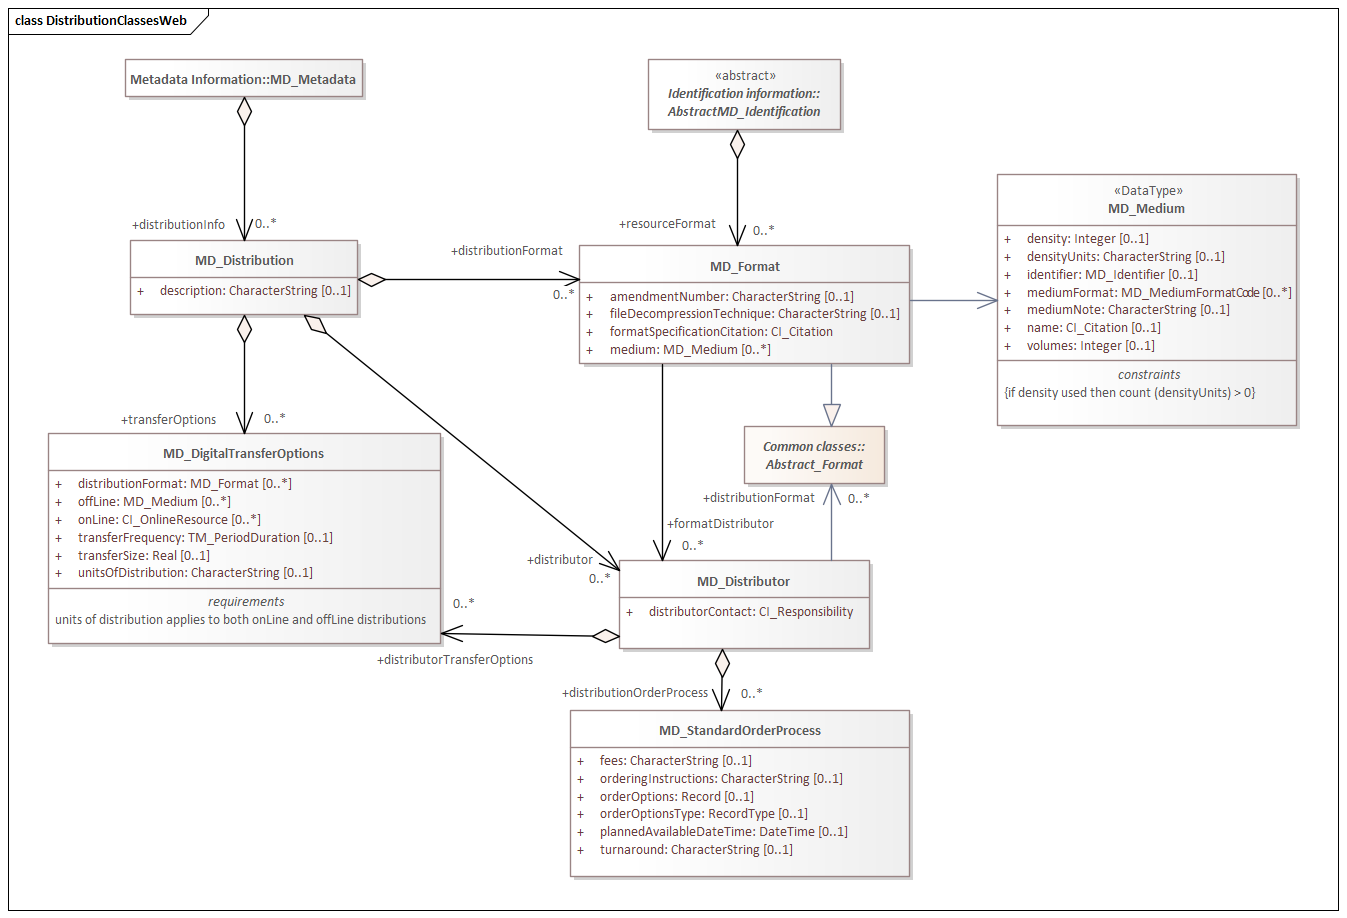 UML diagram of Metadata for Resource Distribution classes in the mrd namespace